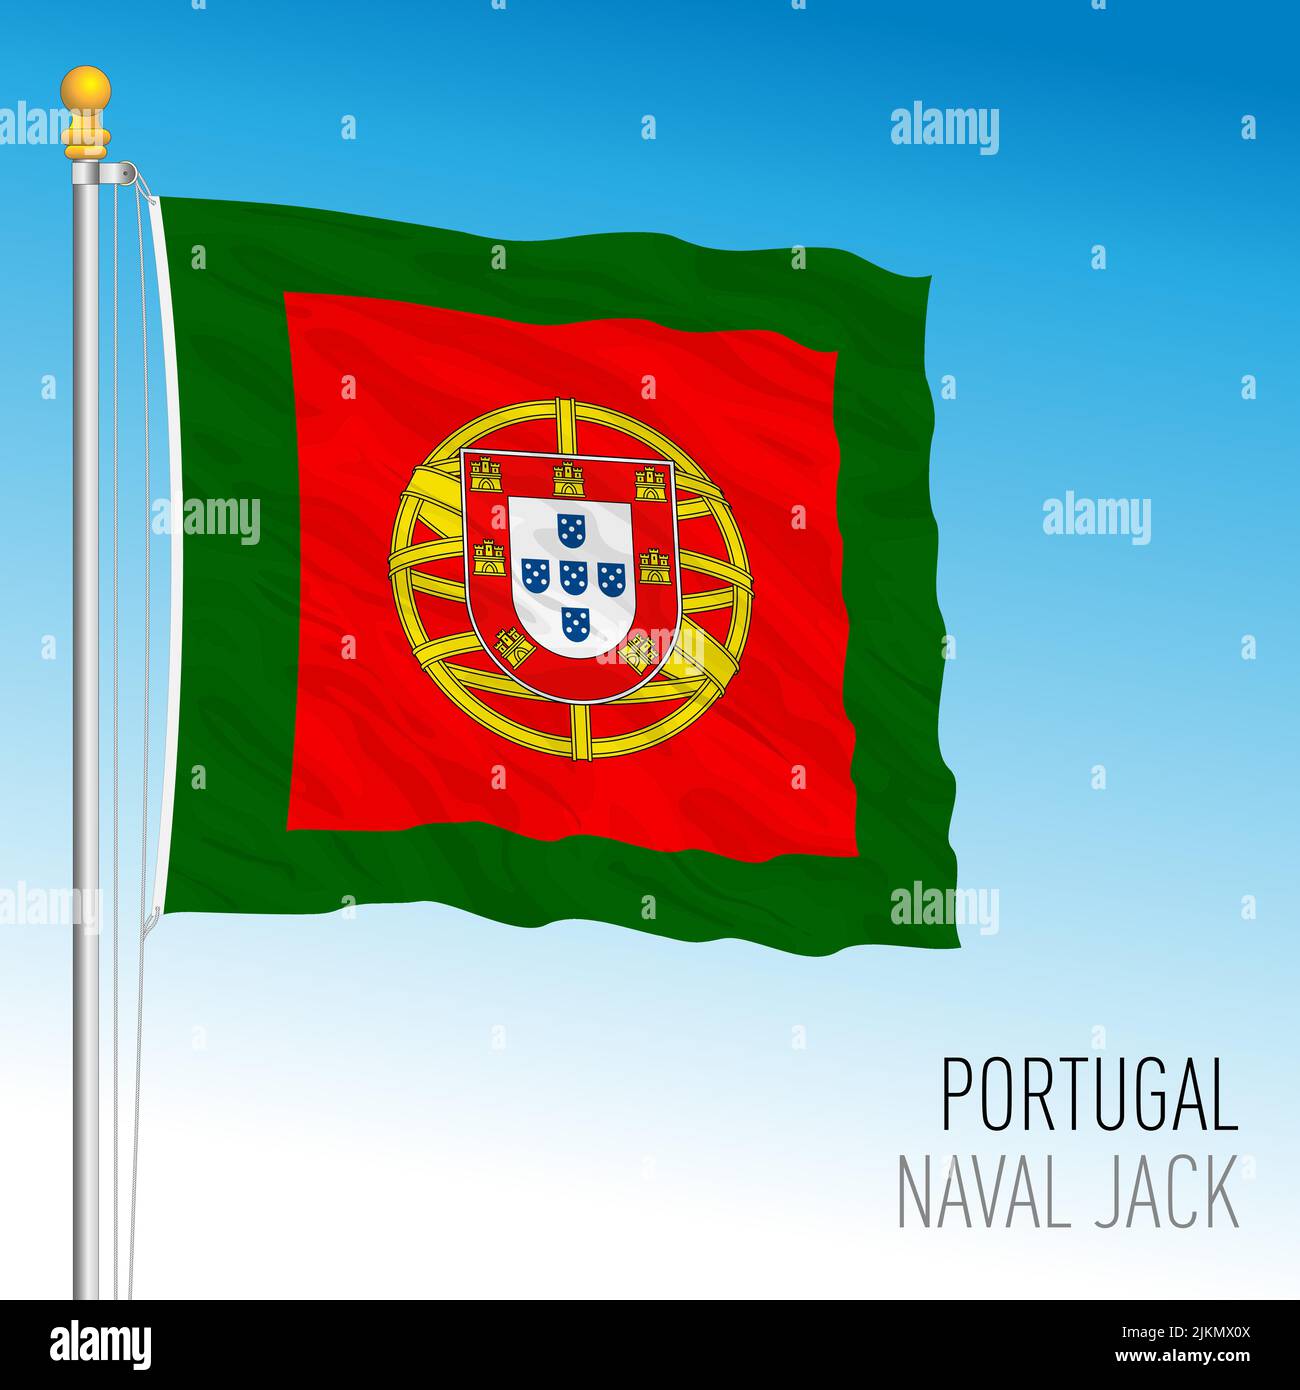 Portugal, Navy Jack flag, European Union, vector illustration Stock Vector